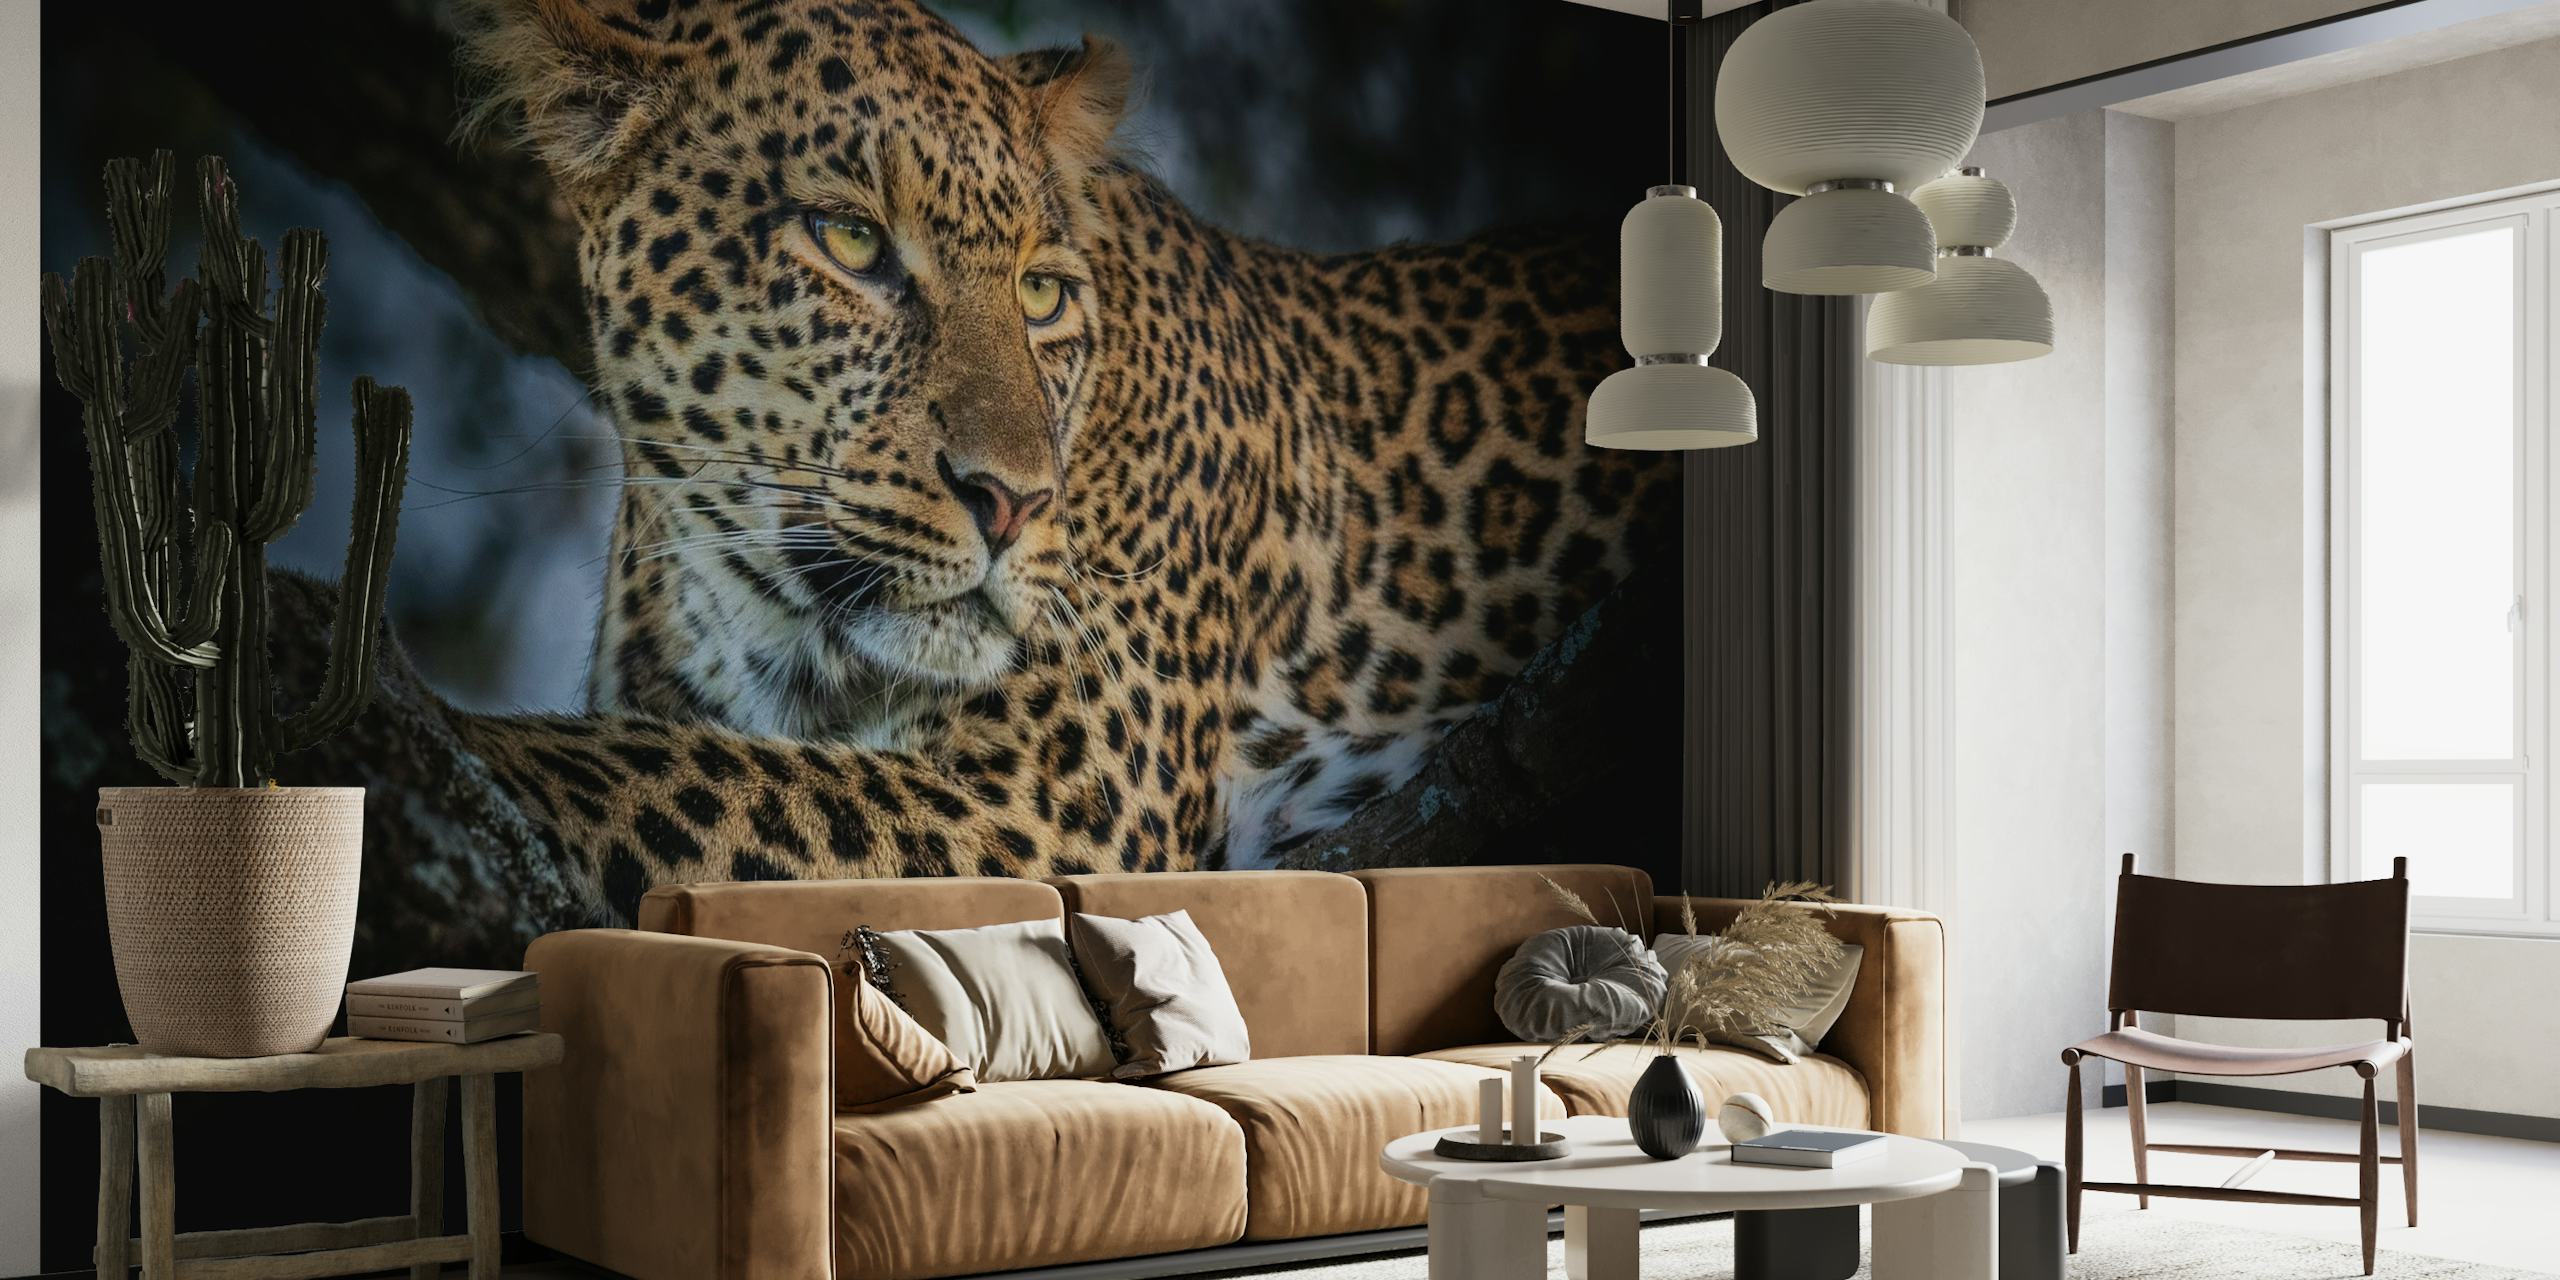 The Leopard Wallpaper - Buy Now